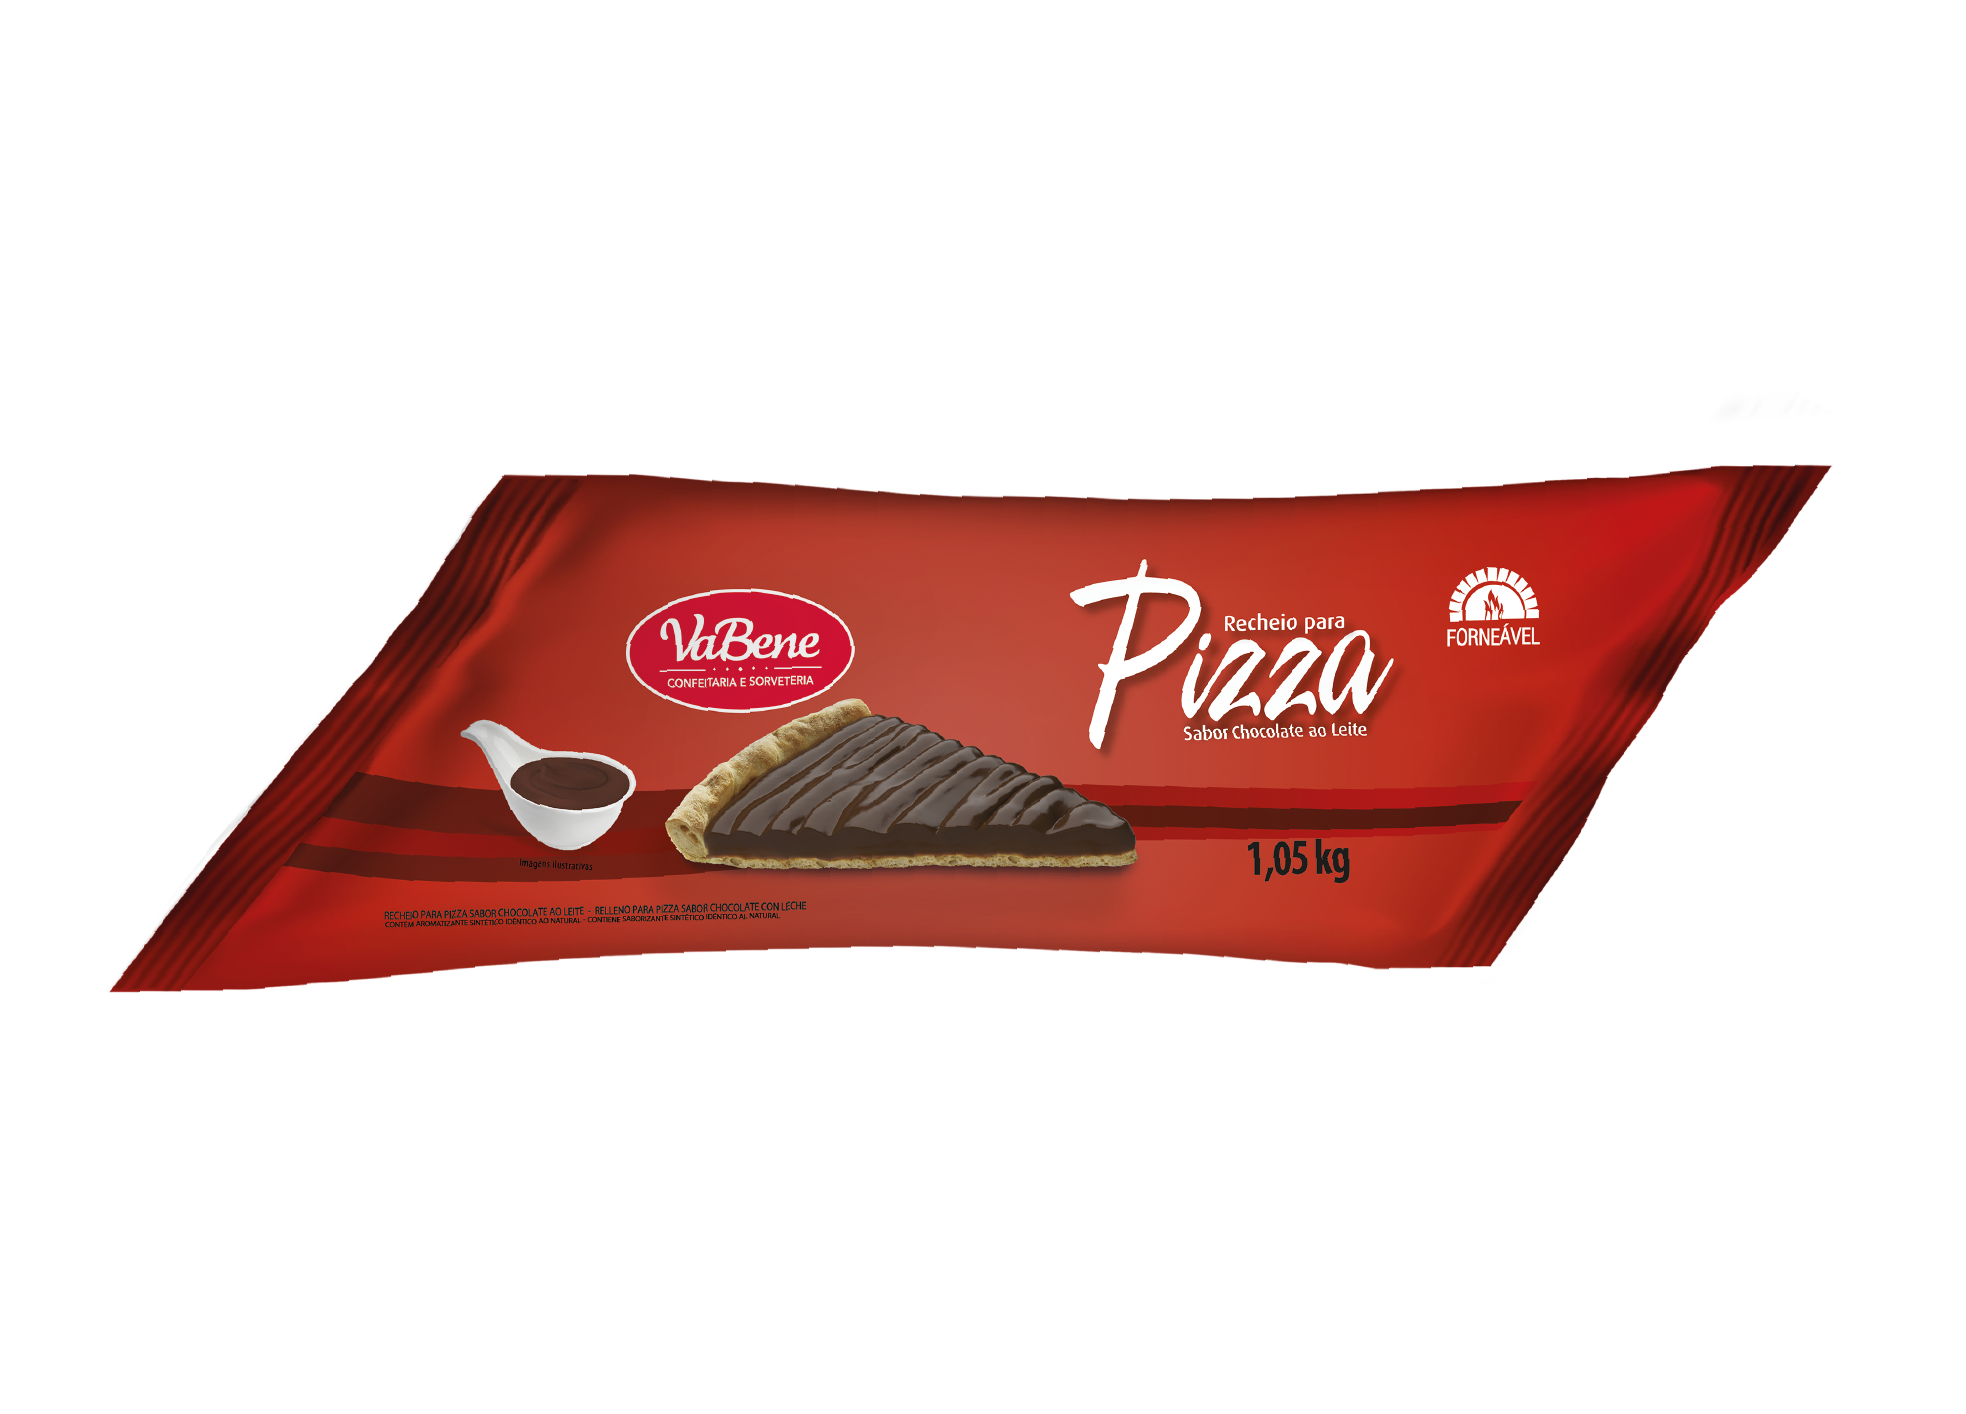 VABENE RECHEIO CHOCOLATE AO LEITE PIZZA 1,05                                                        